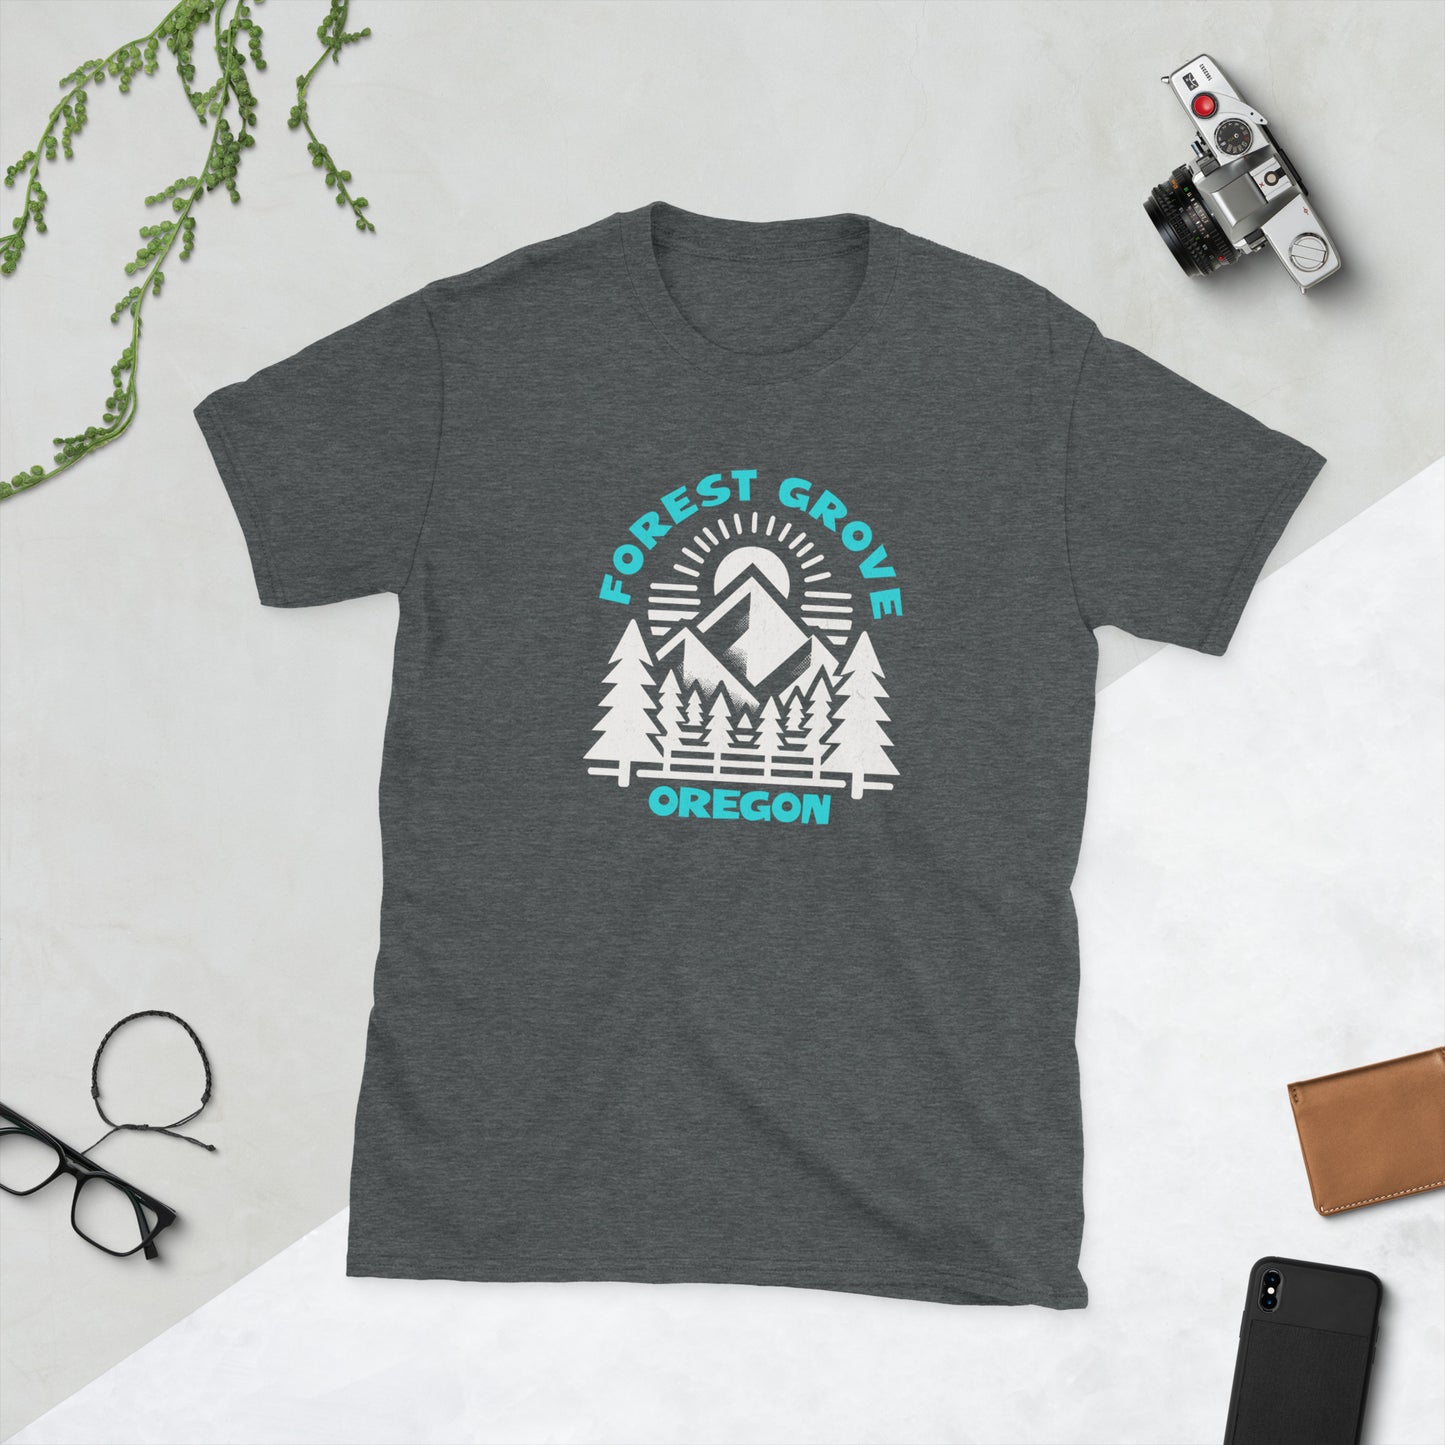 Forest Grove - Featured Cities -Short-Sleeve Unisex T-Shirt